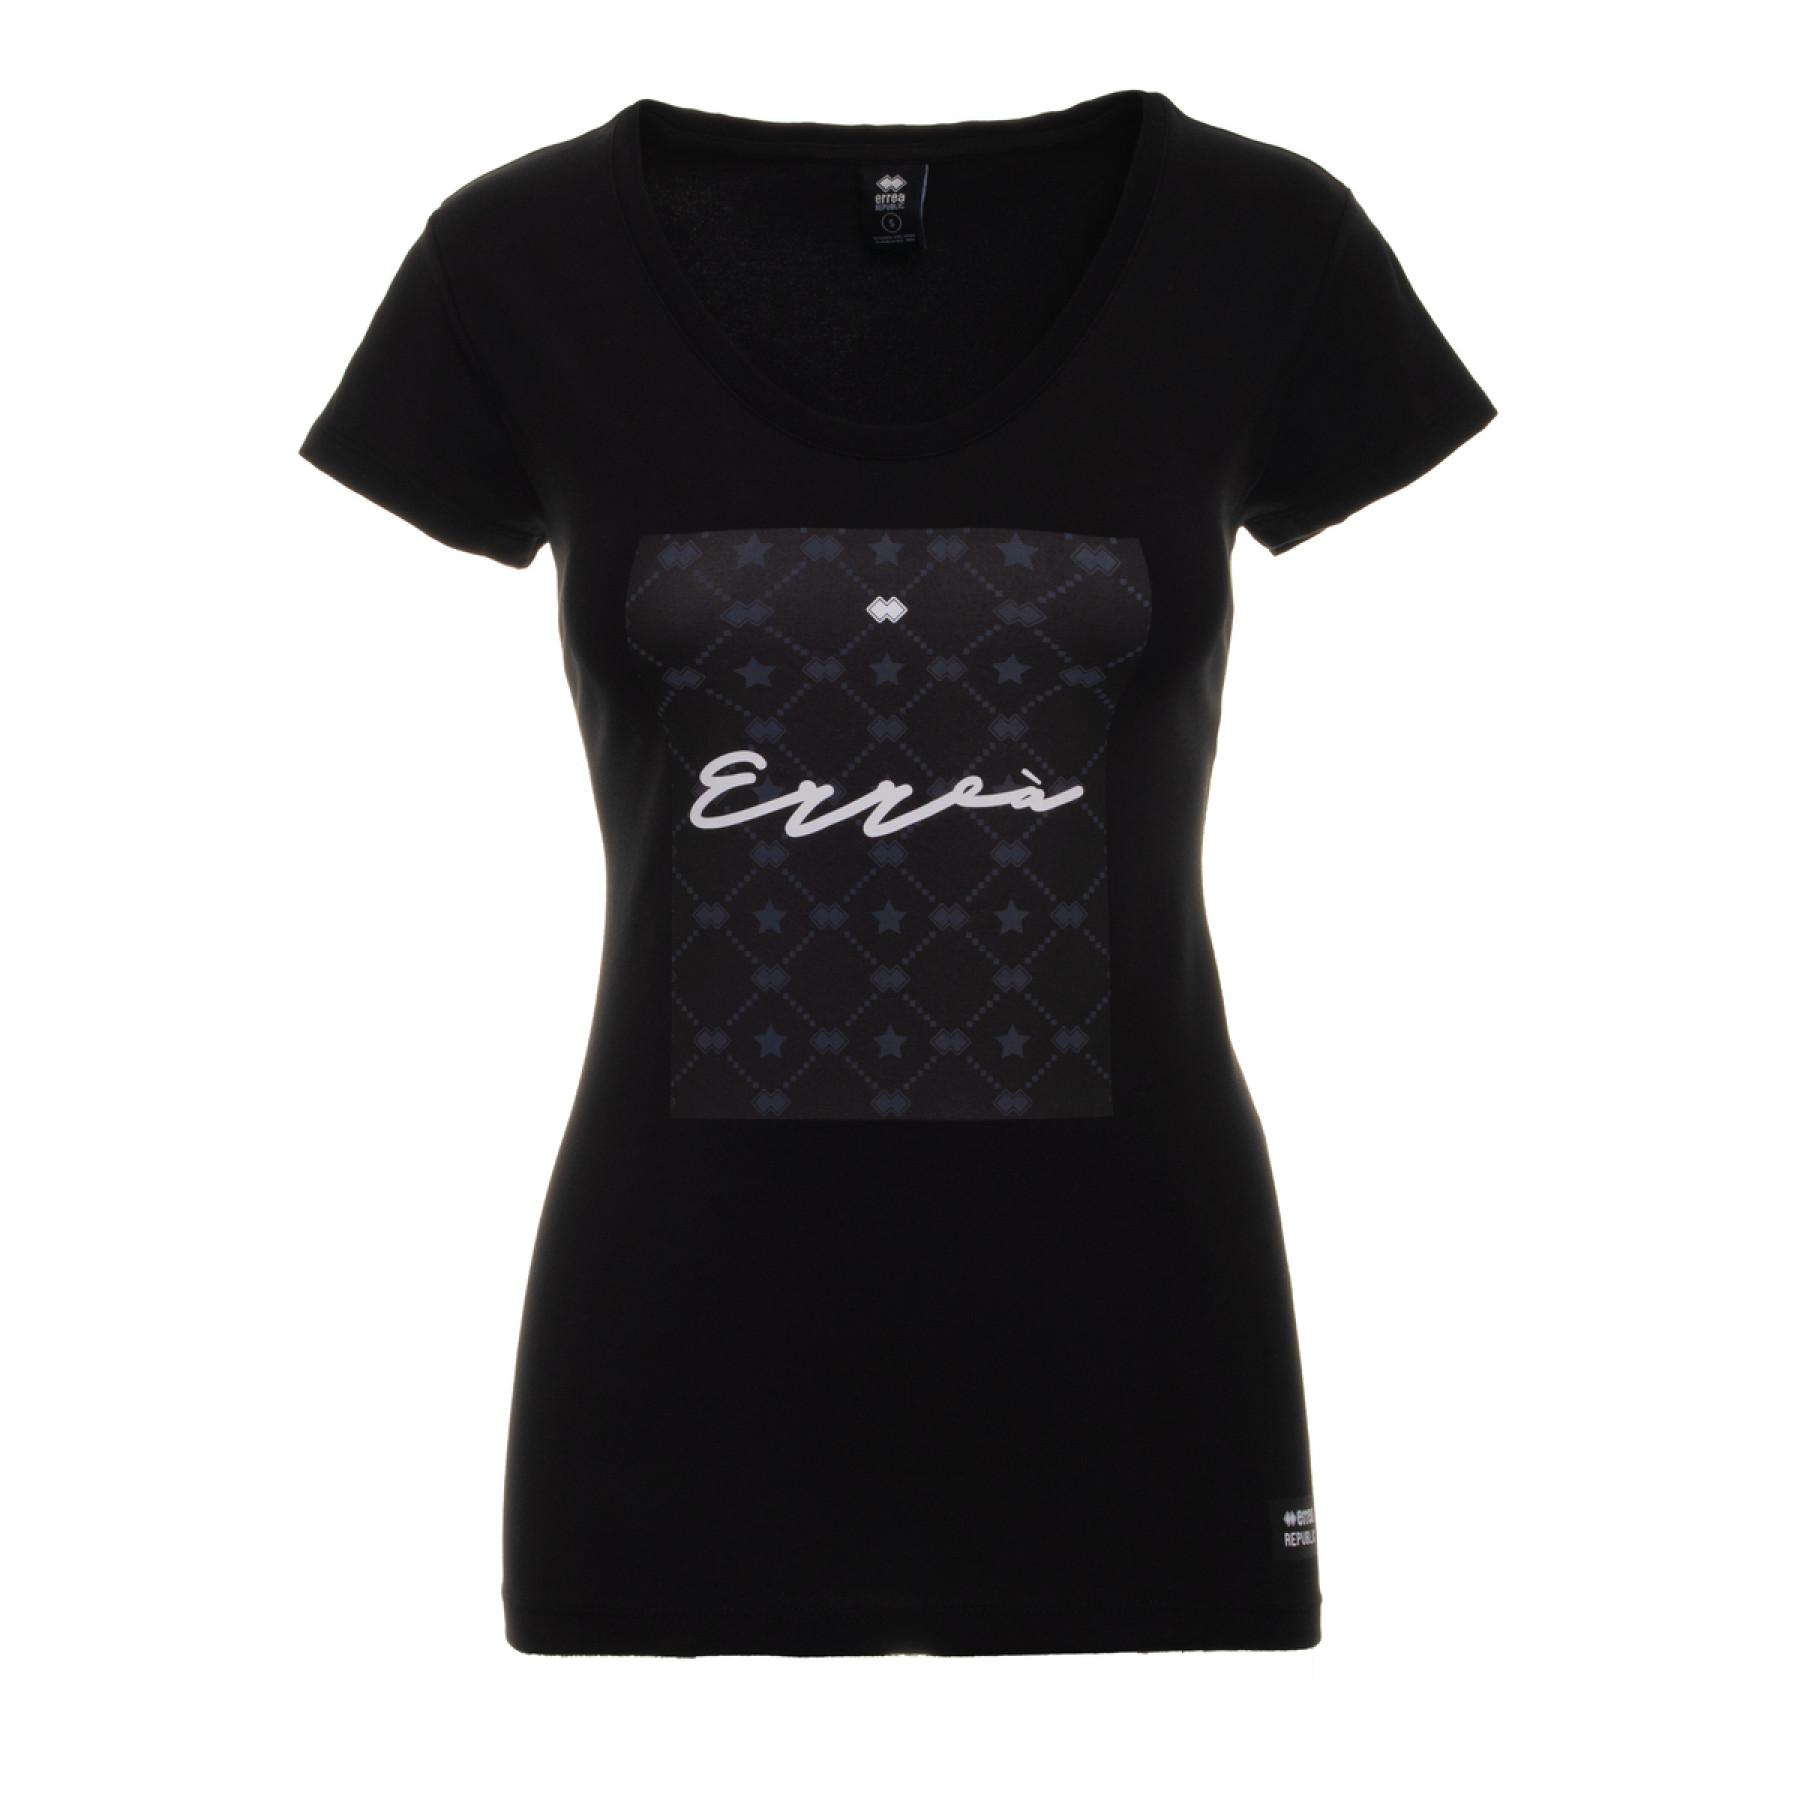 Mädchen-T-Shirt Errea essential